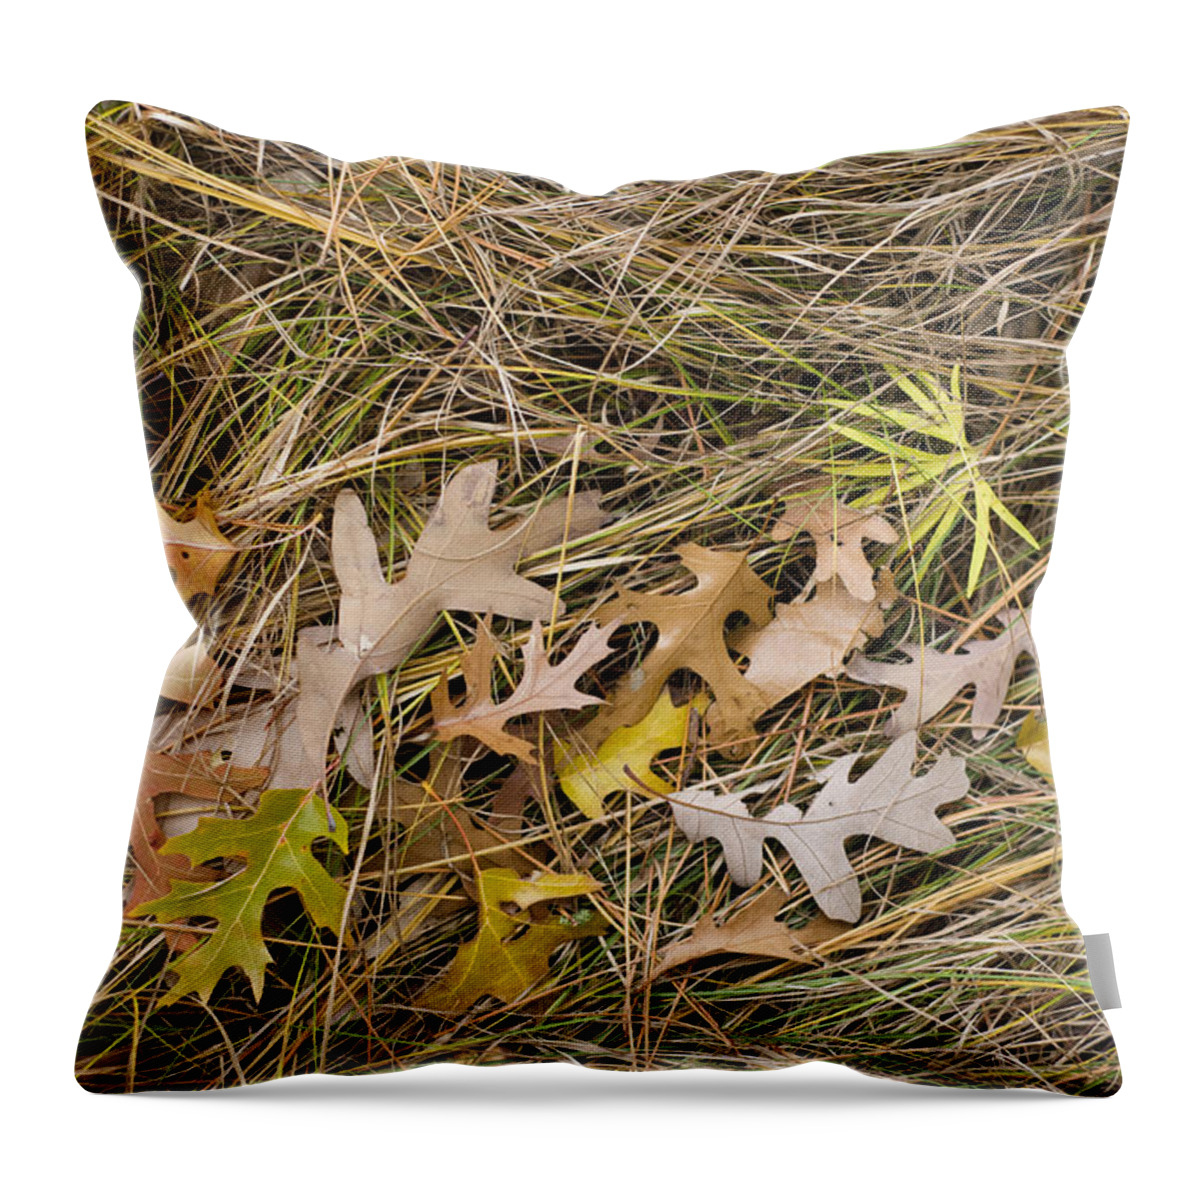 Oak Leaves Throw Pillow featuring the photograph Oak Leaves on Grass by Lynn Hansen